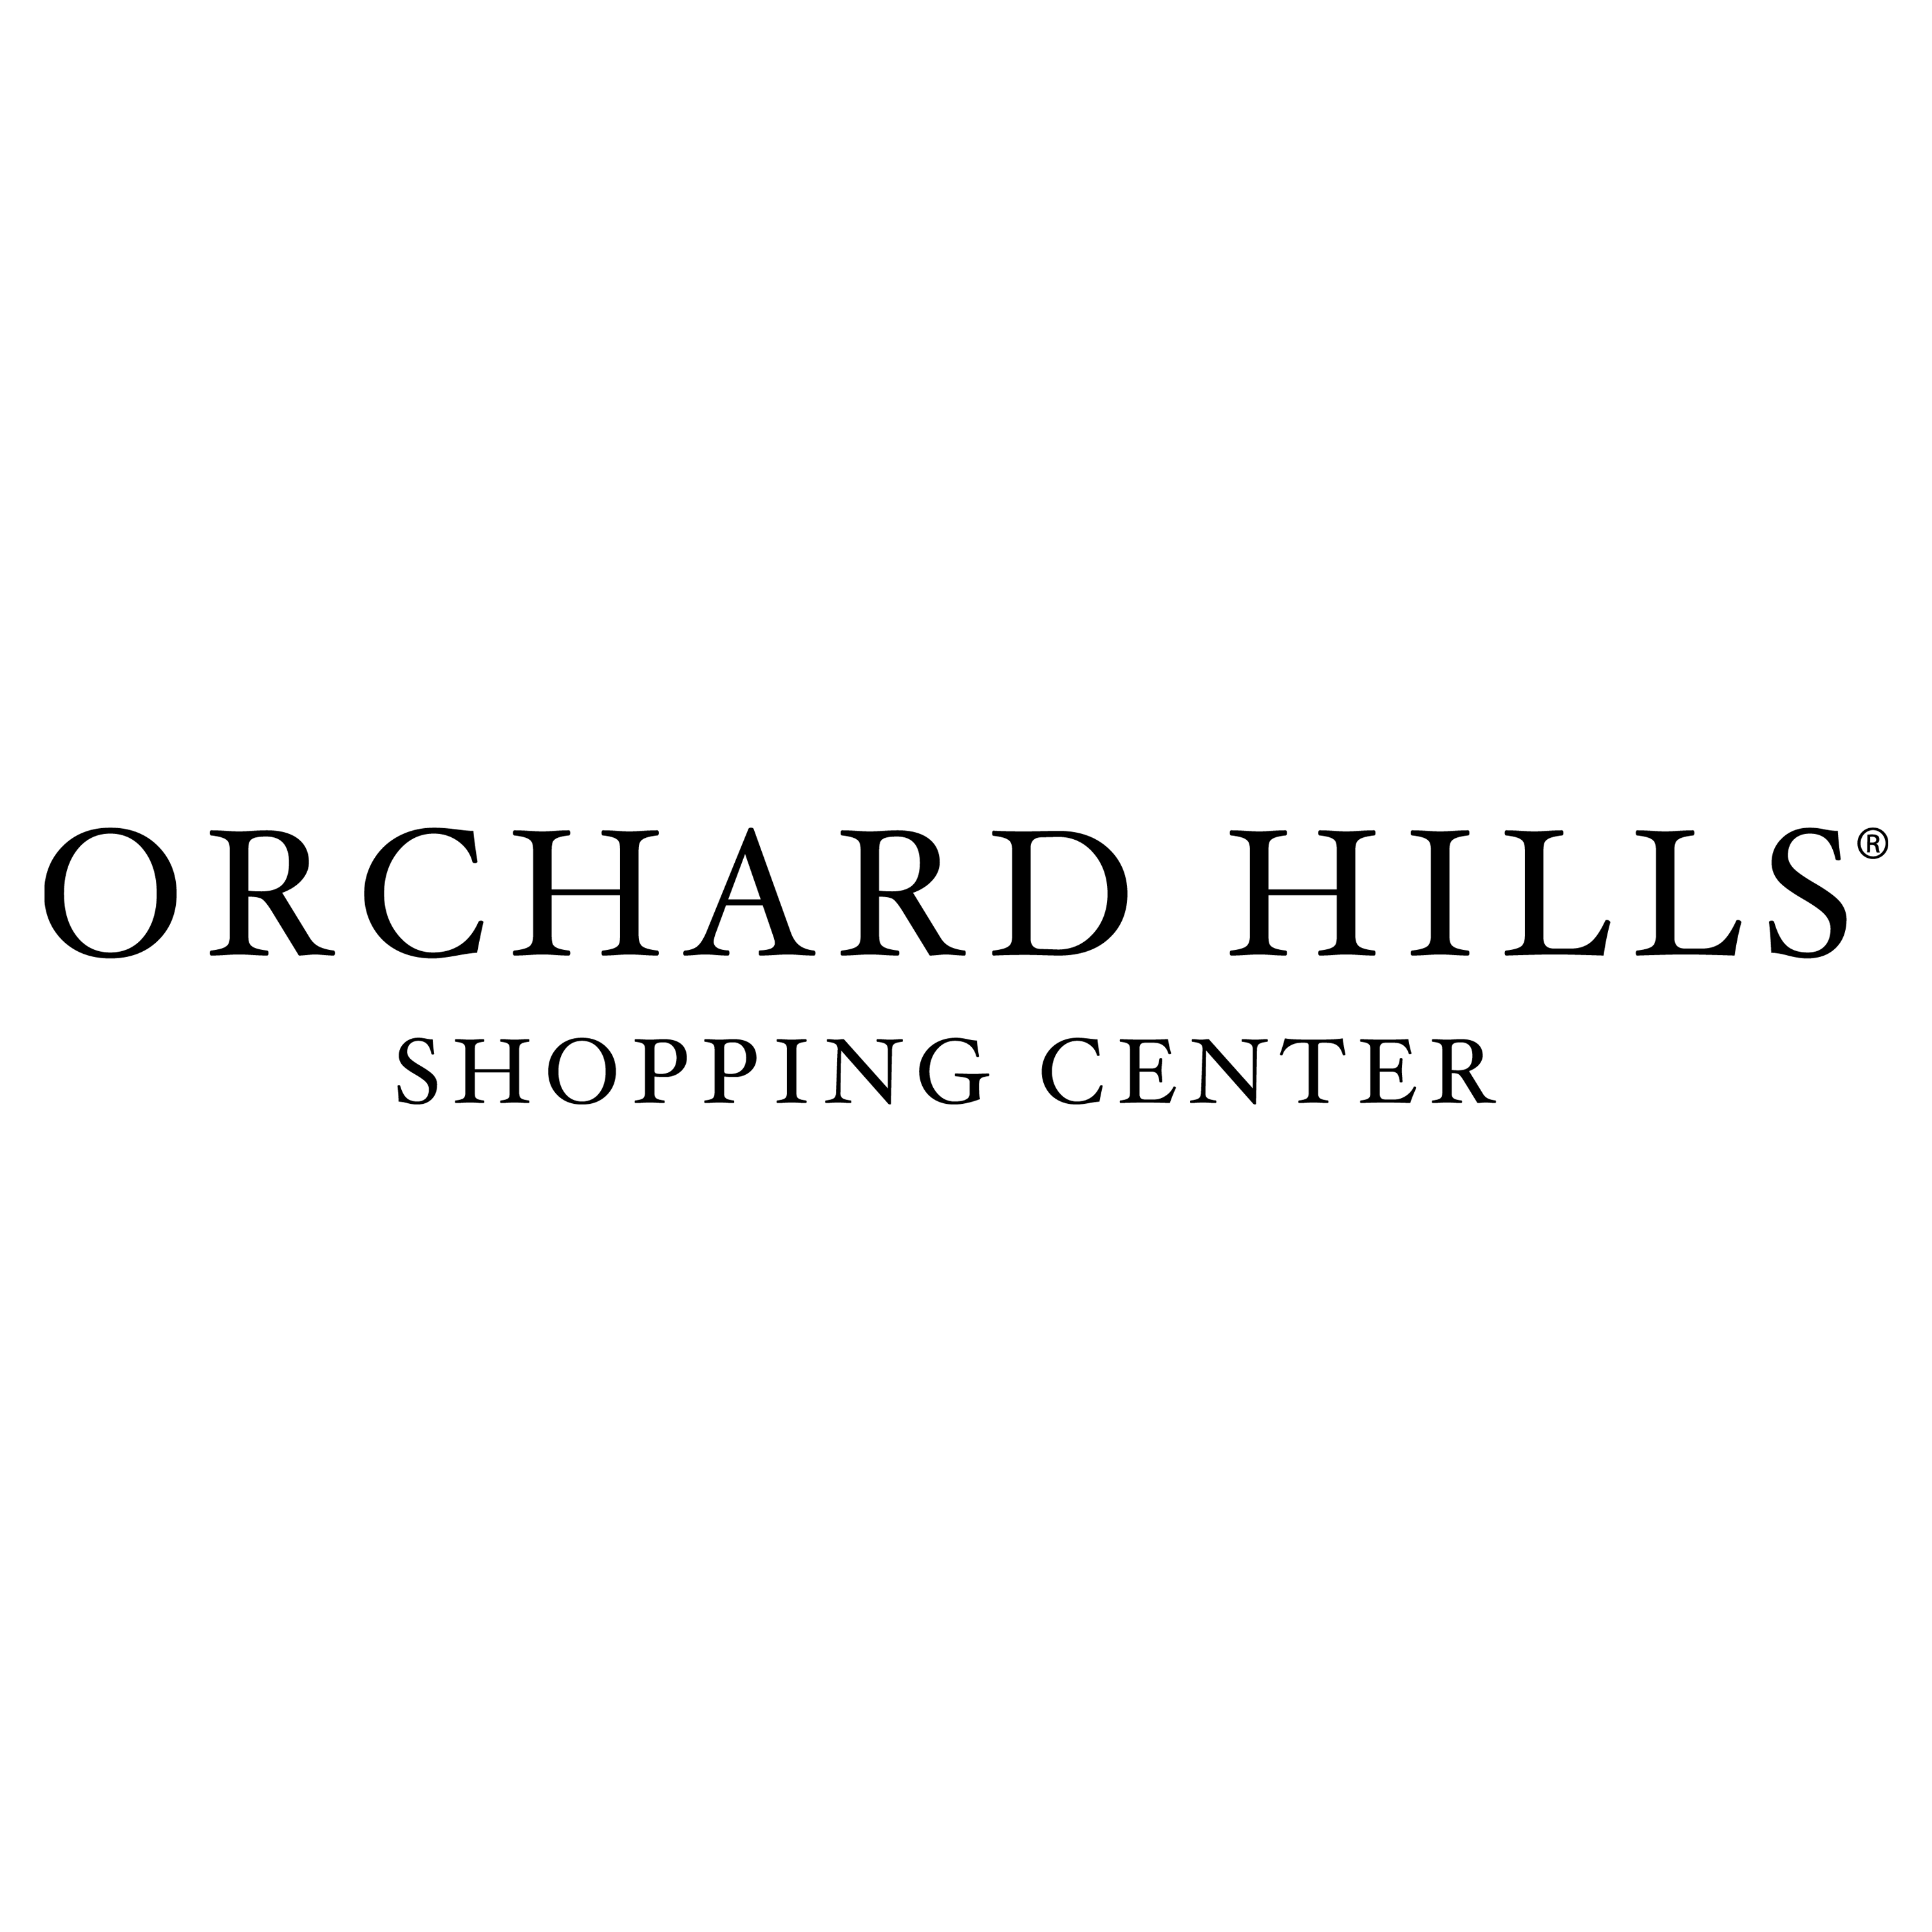 Orchard Hills Shopping Center - Irvine, CA 92602 - (949)720-3100 | ShowMeLocal.com